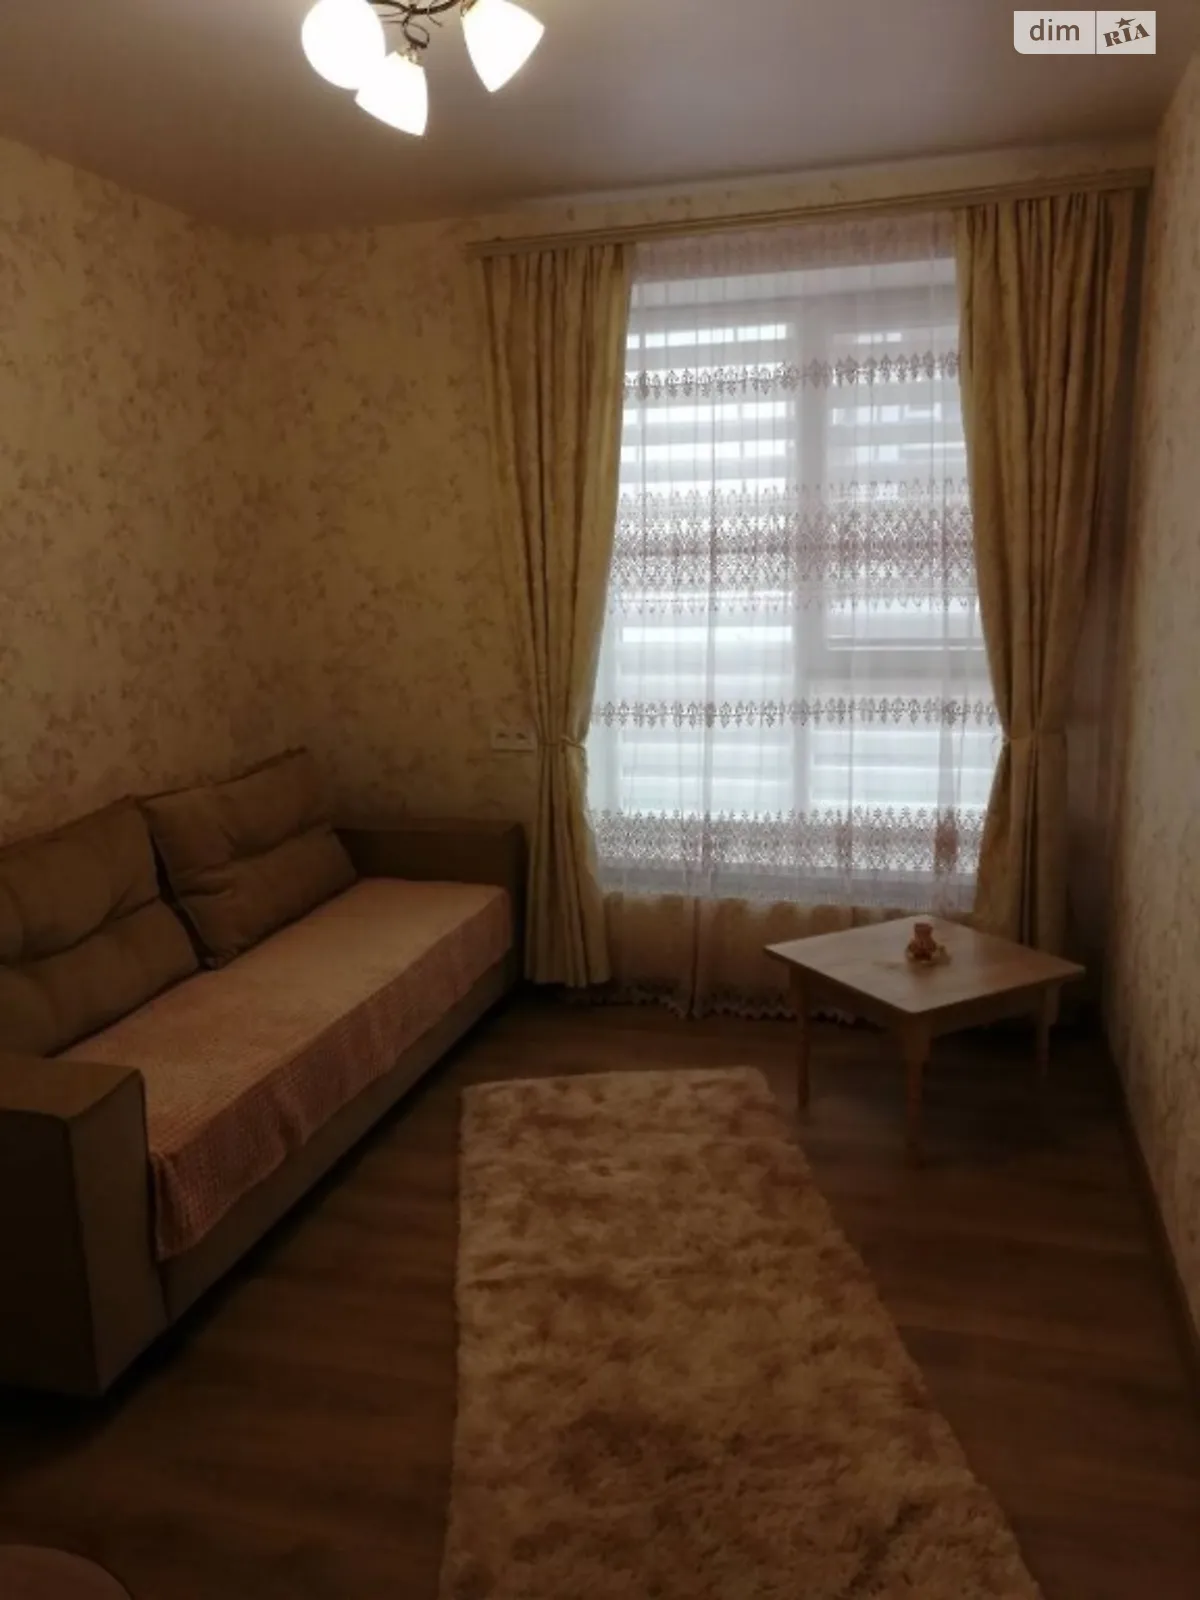 Сдается в аренду 2-комнатная квартира 55 кв. м в Ивано-Франковске - фото 3